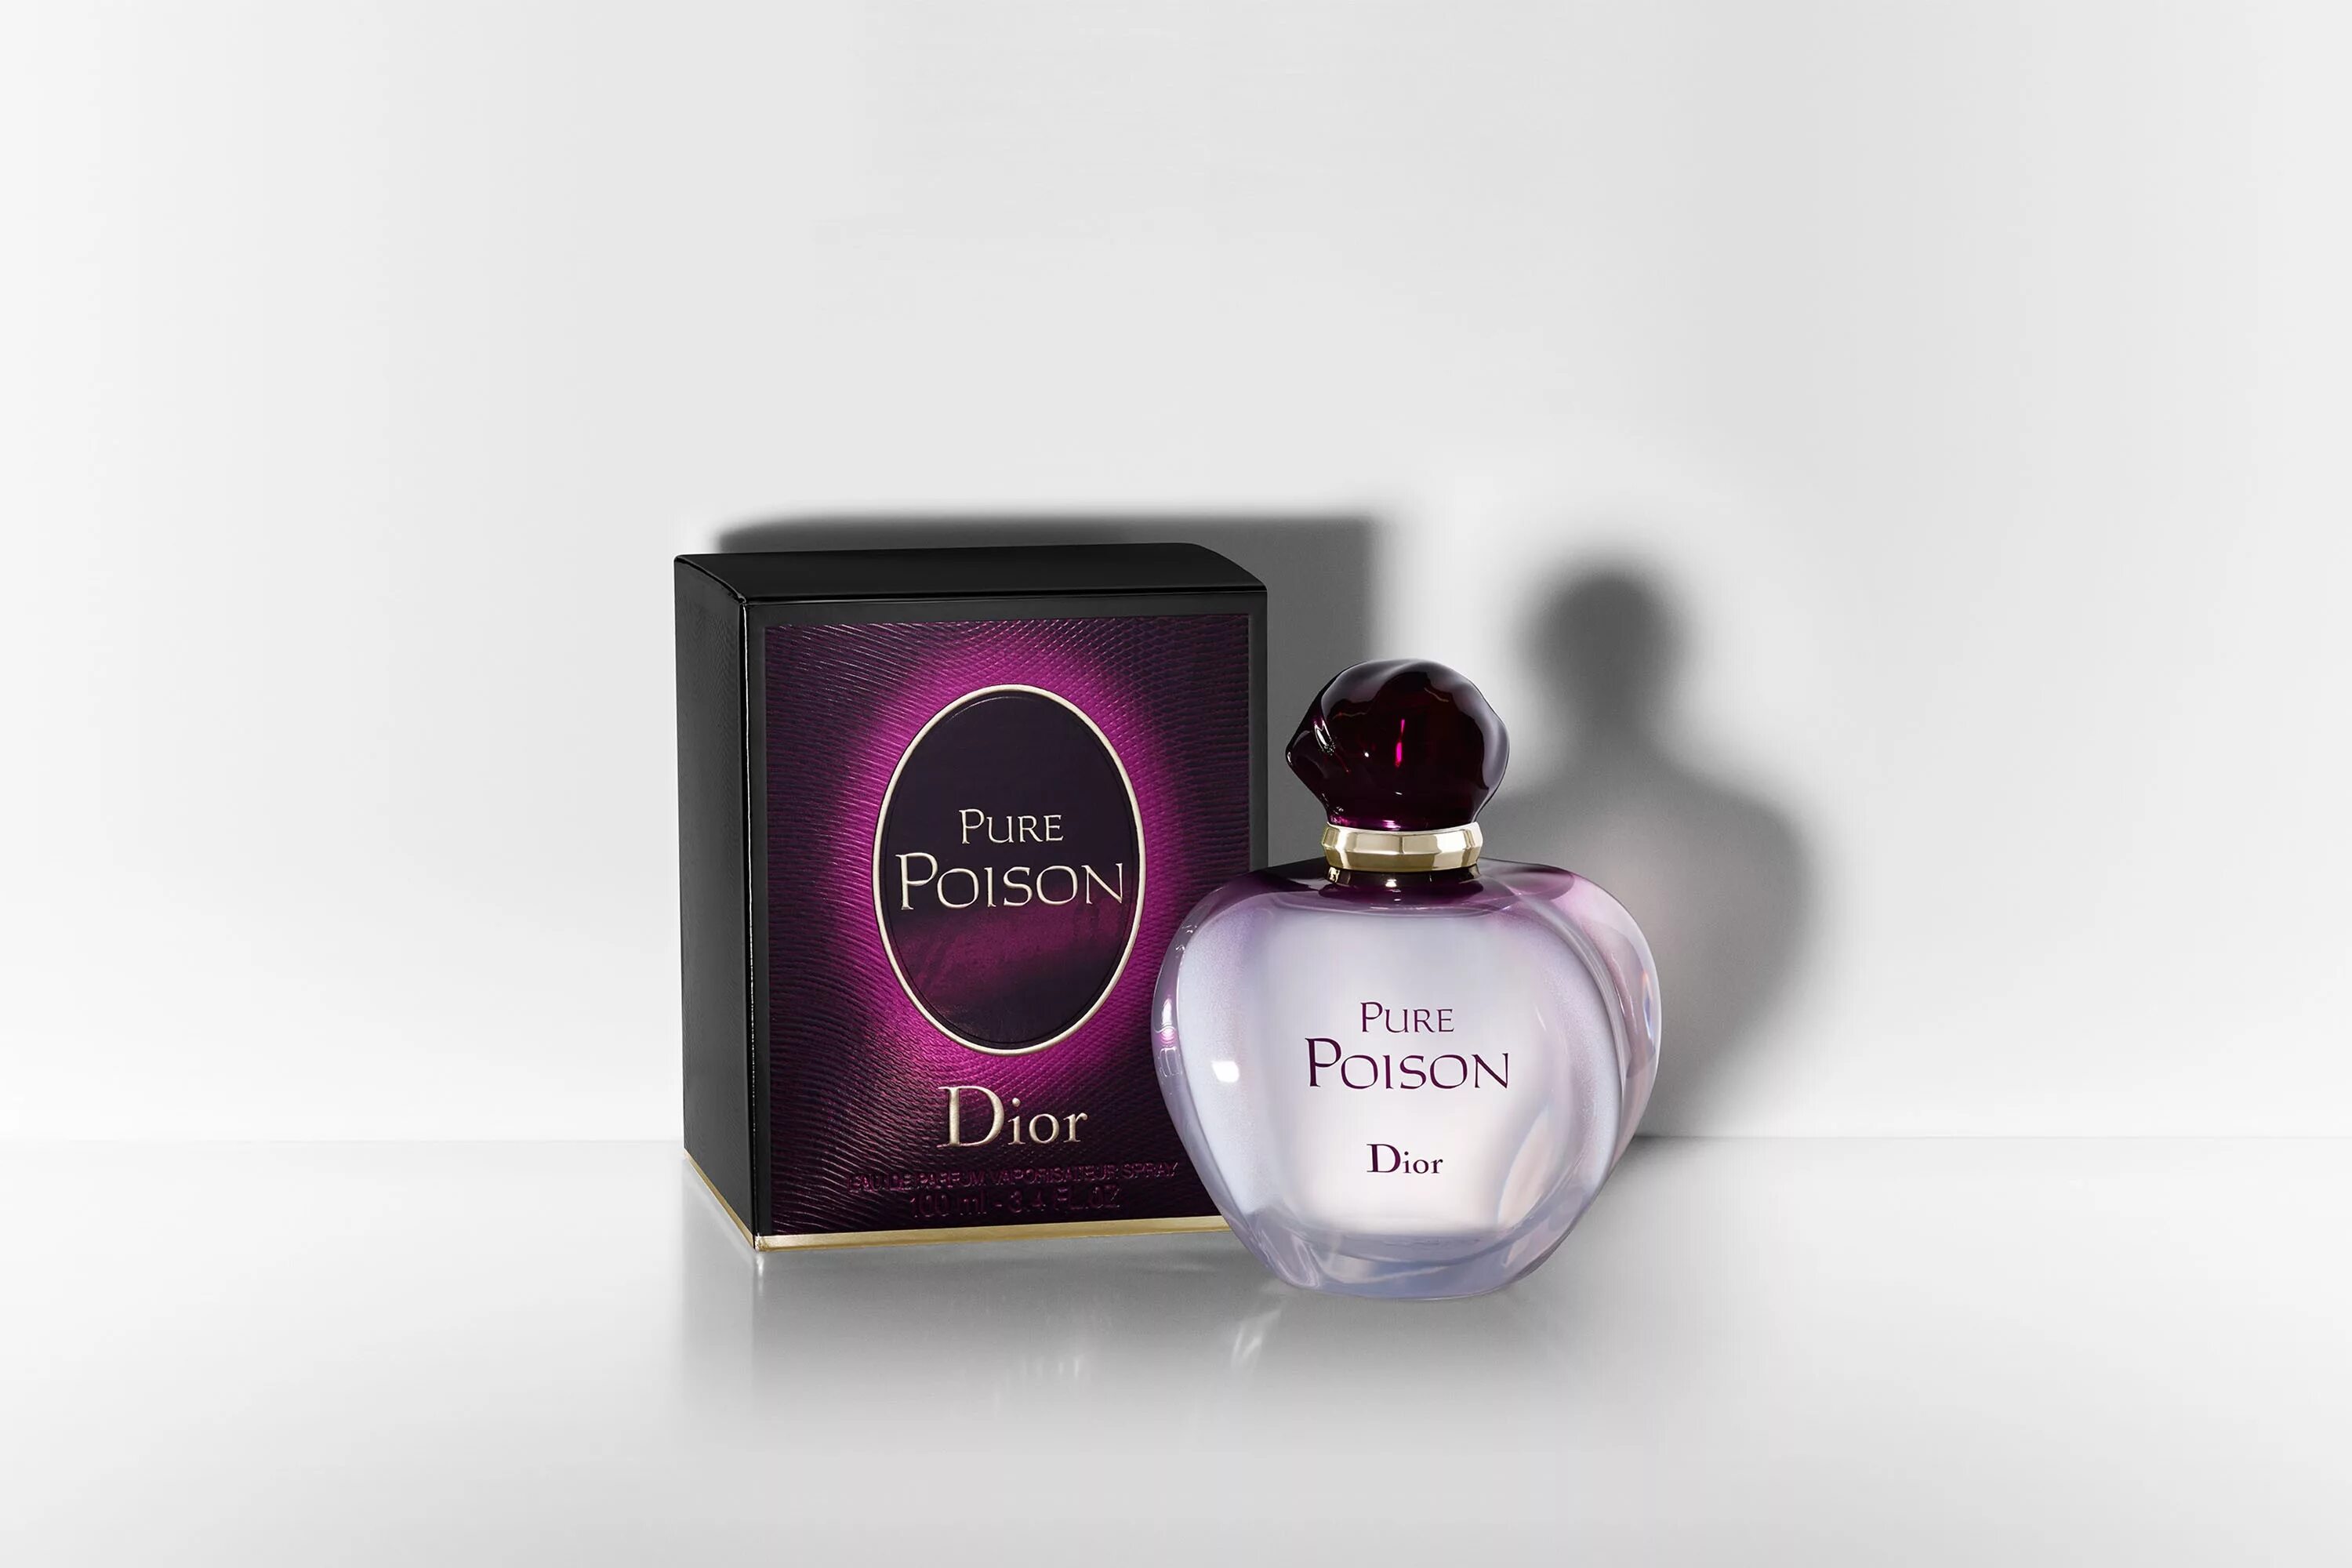 Christian Dior Poison Eau de Parfum 100. Духи Pure Poison Dior. Dior Pure Poison 100. Dior Poison Pure - 100 ml EDP.